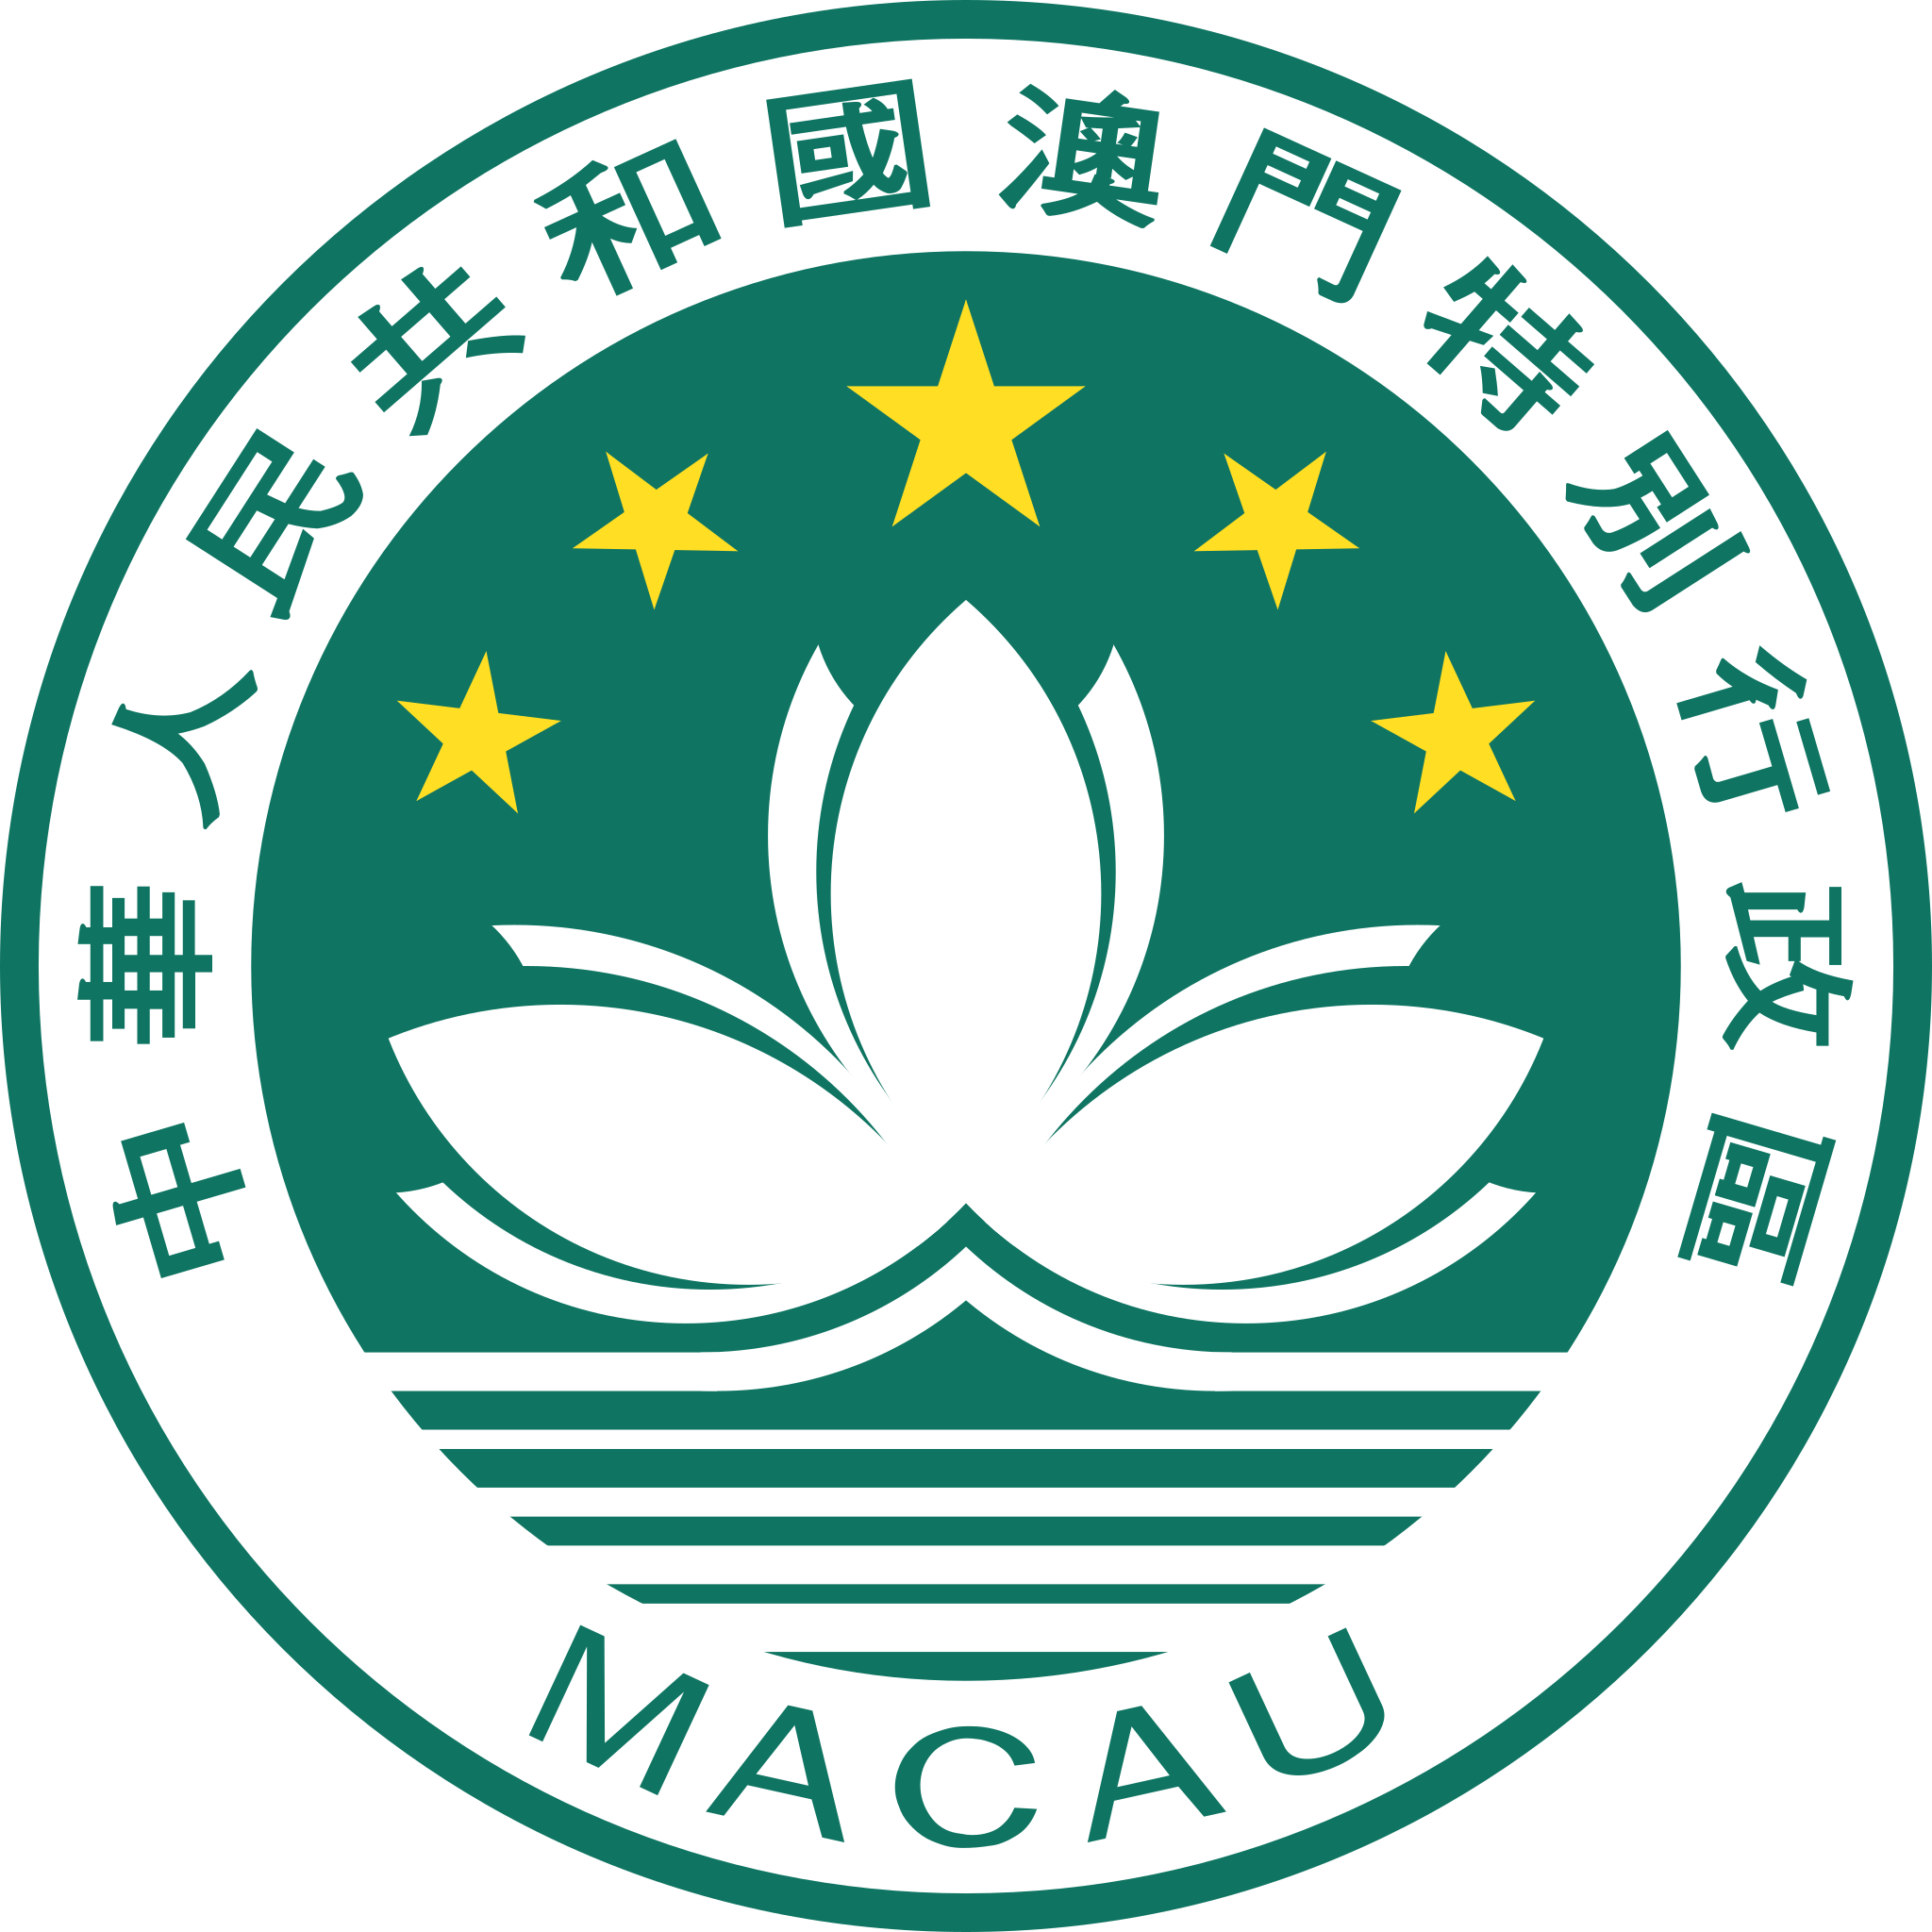 General 2048x2048 Macau logo flag transparent background simple background